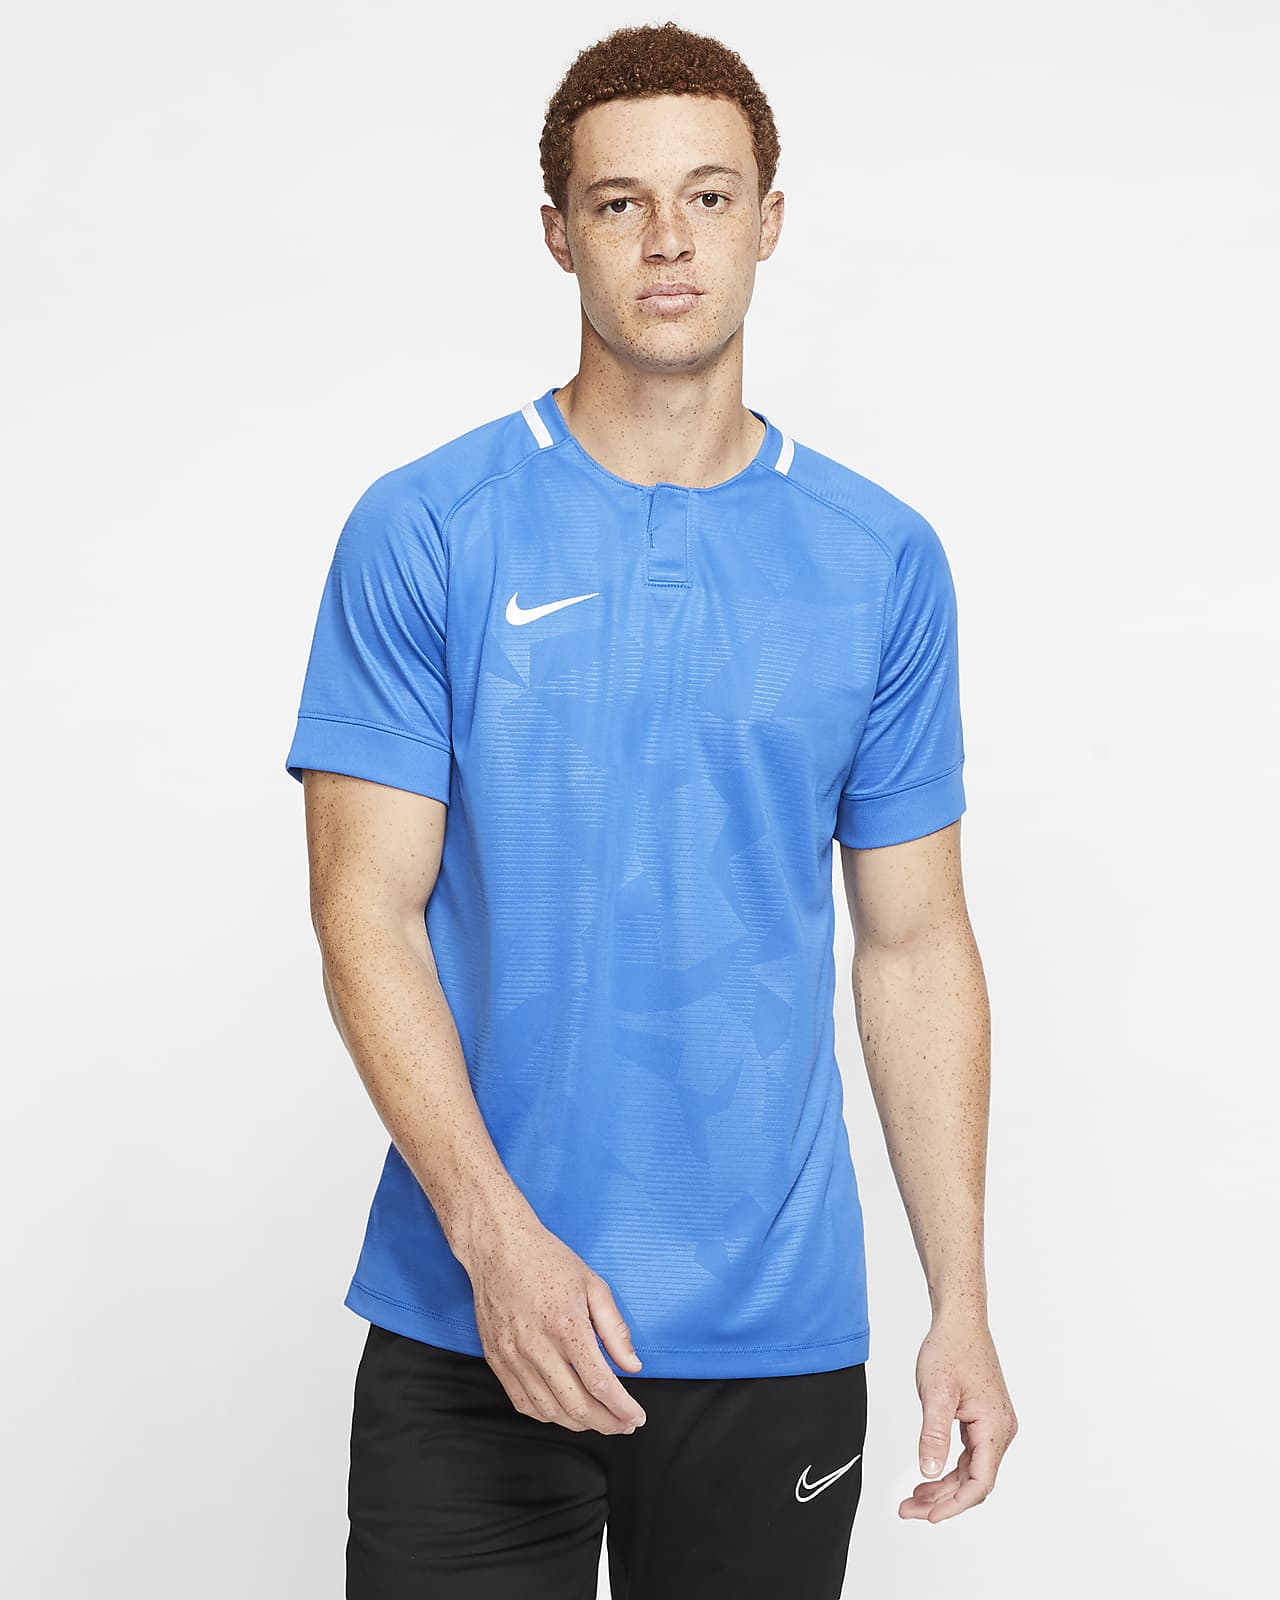 Nike Dri-FIT Challenge 2 Men's Soccer Jersey